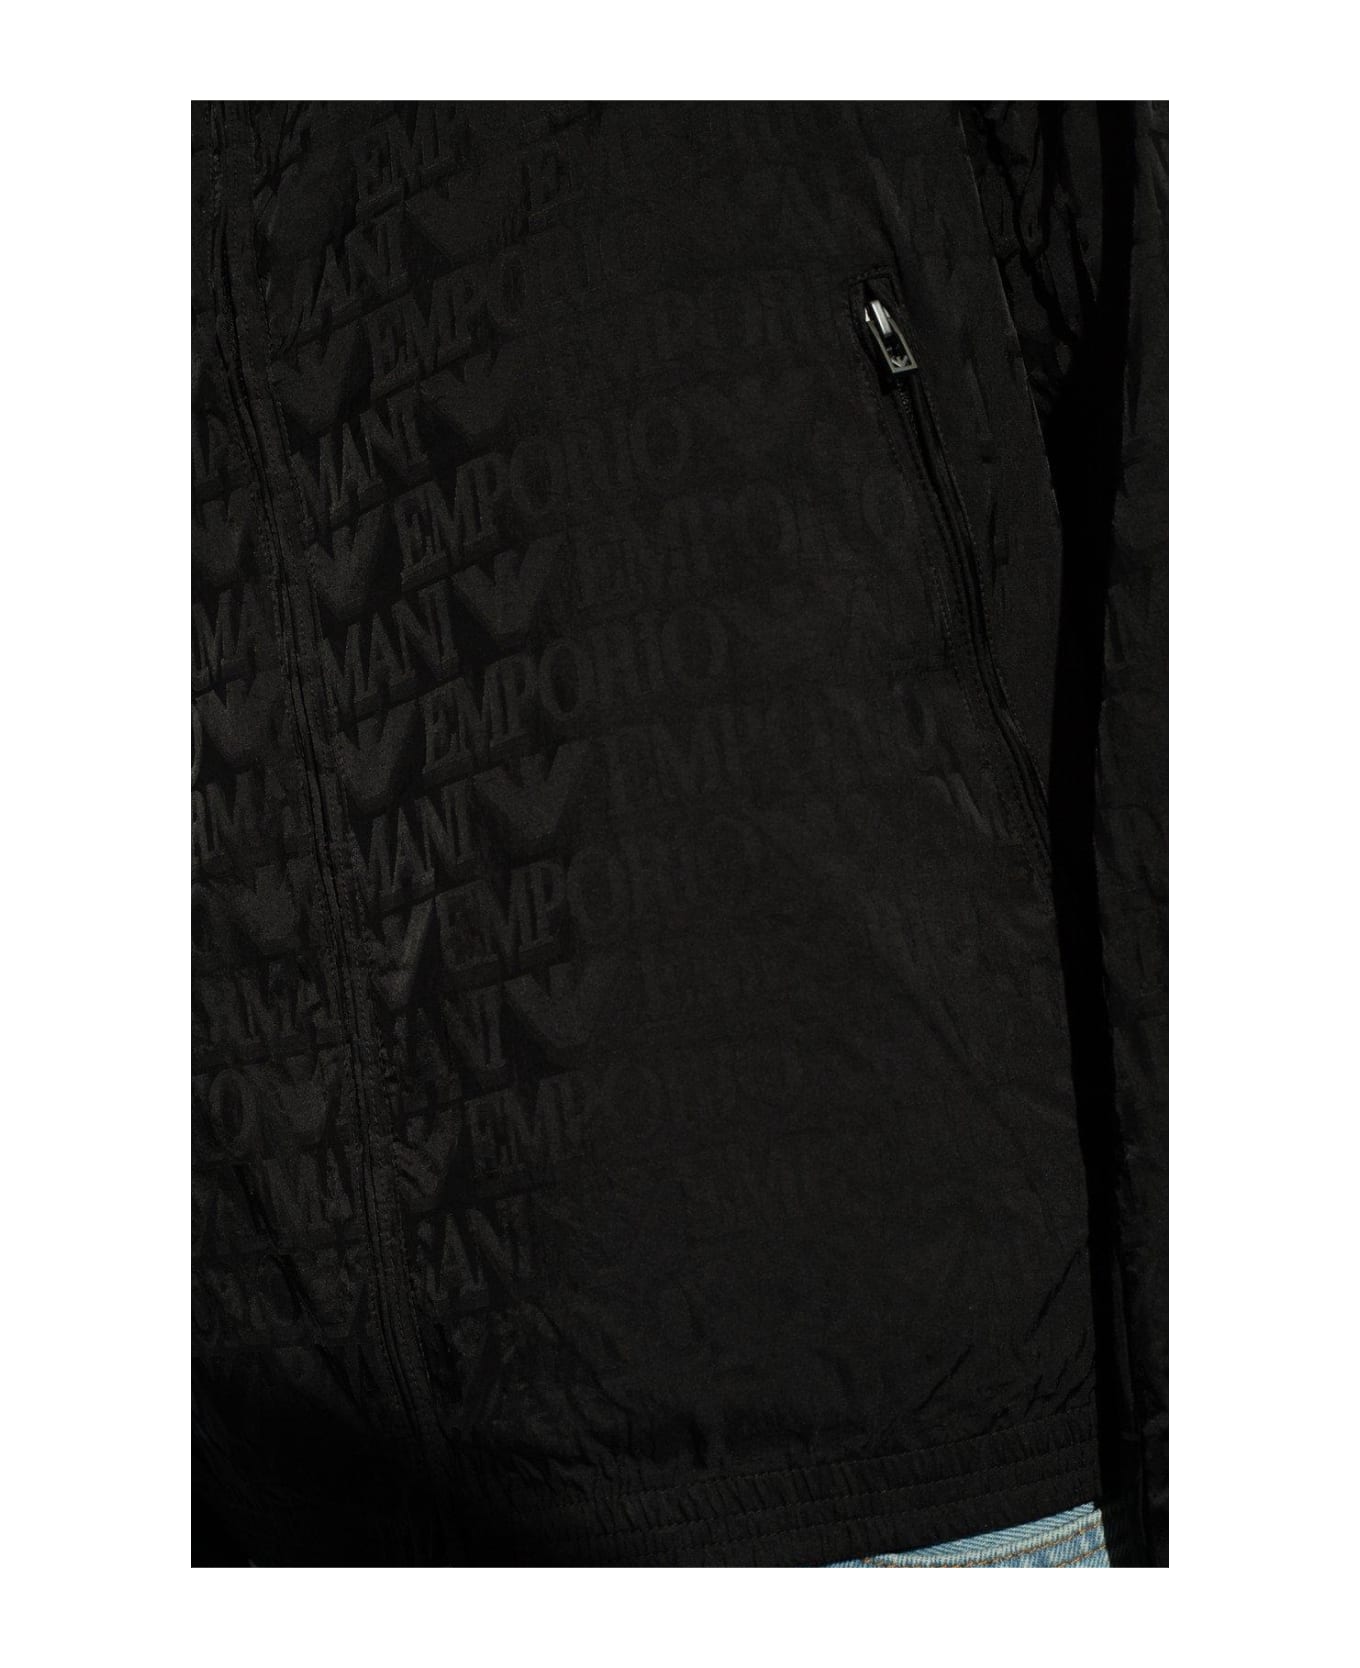 Emporio Armani Hooded Jacket - Black ジャケット